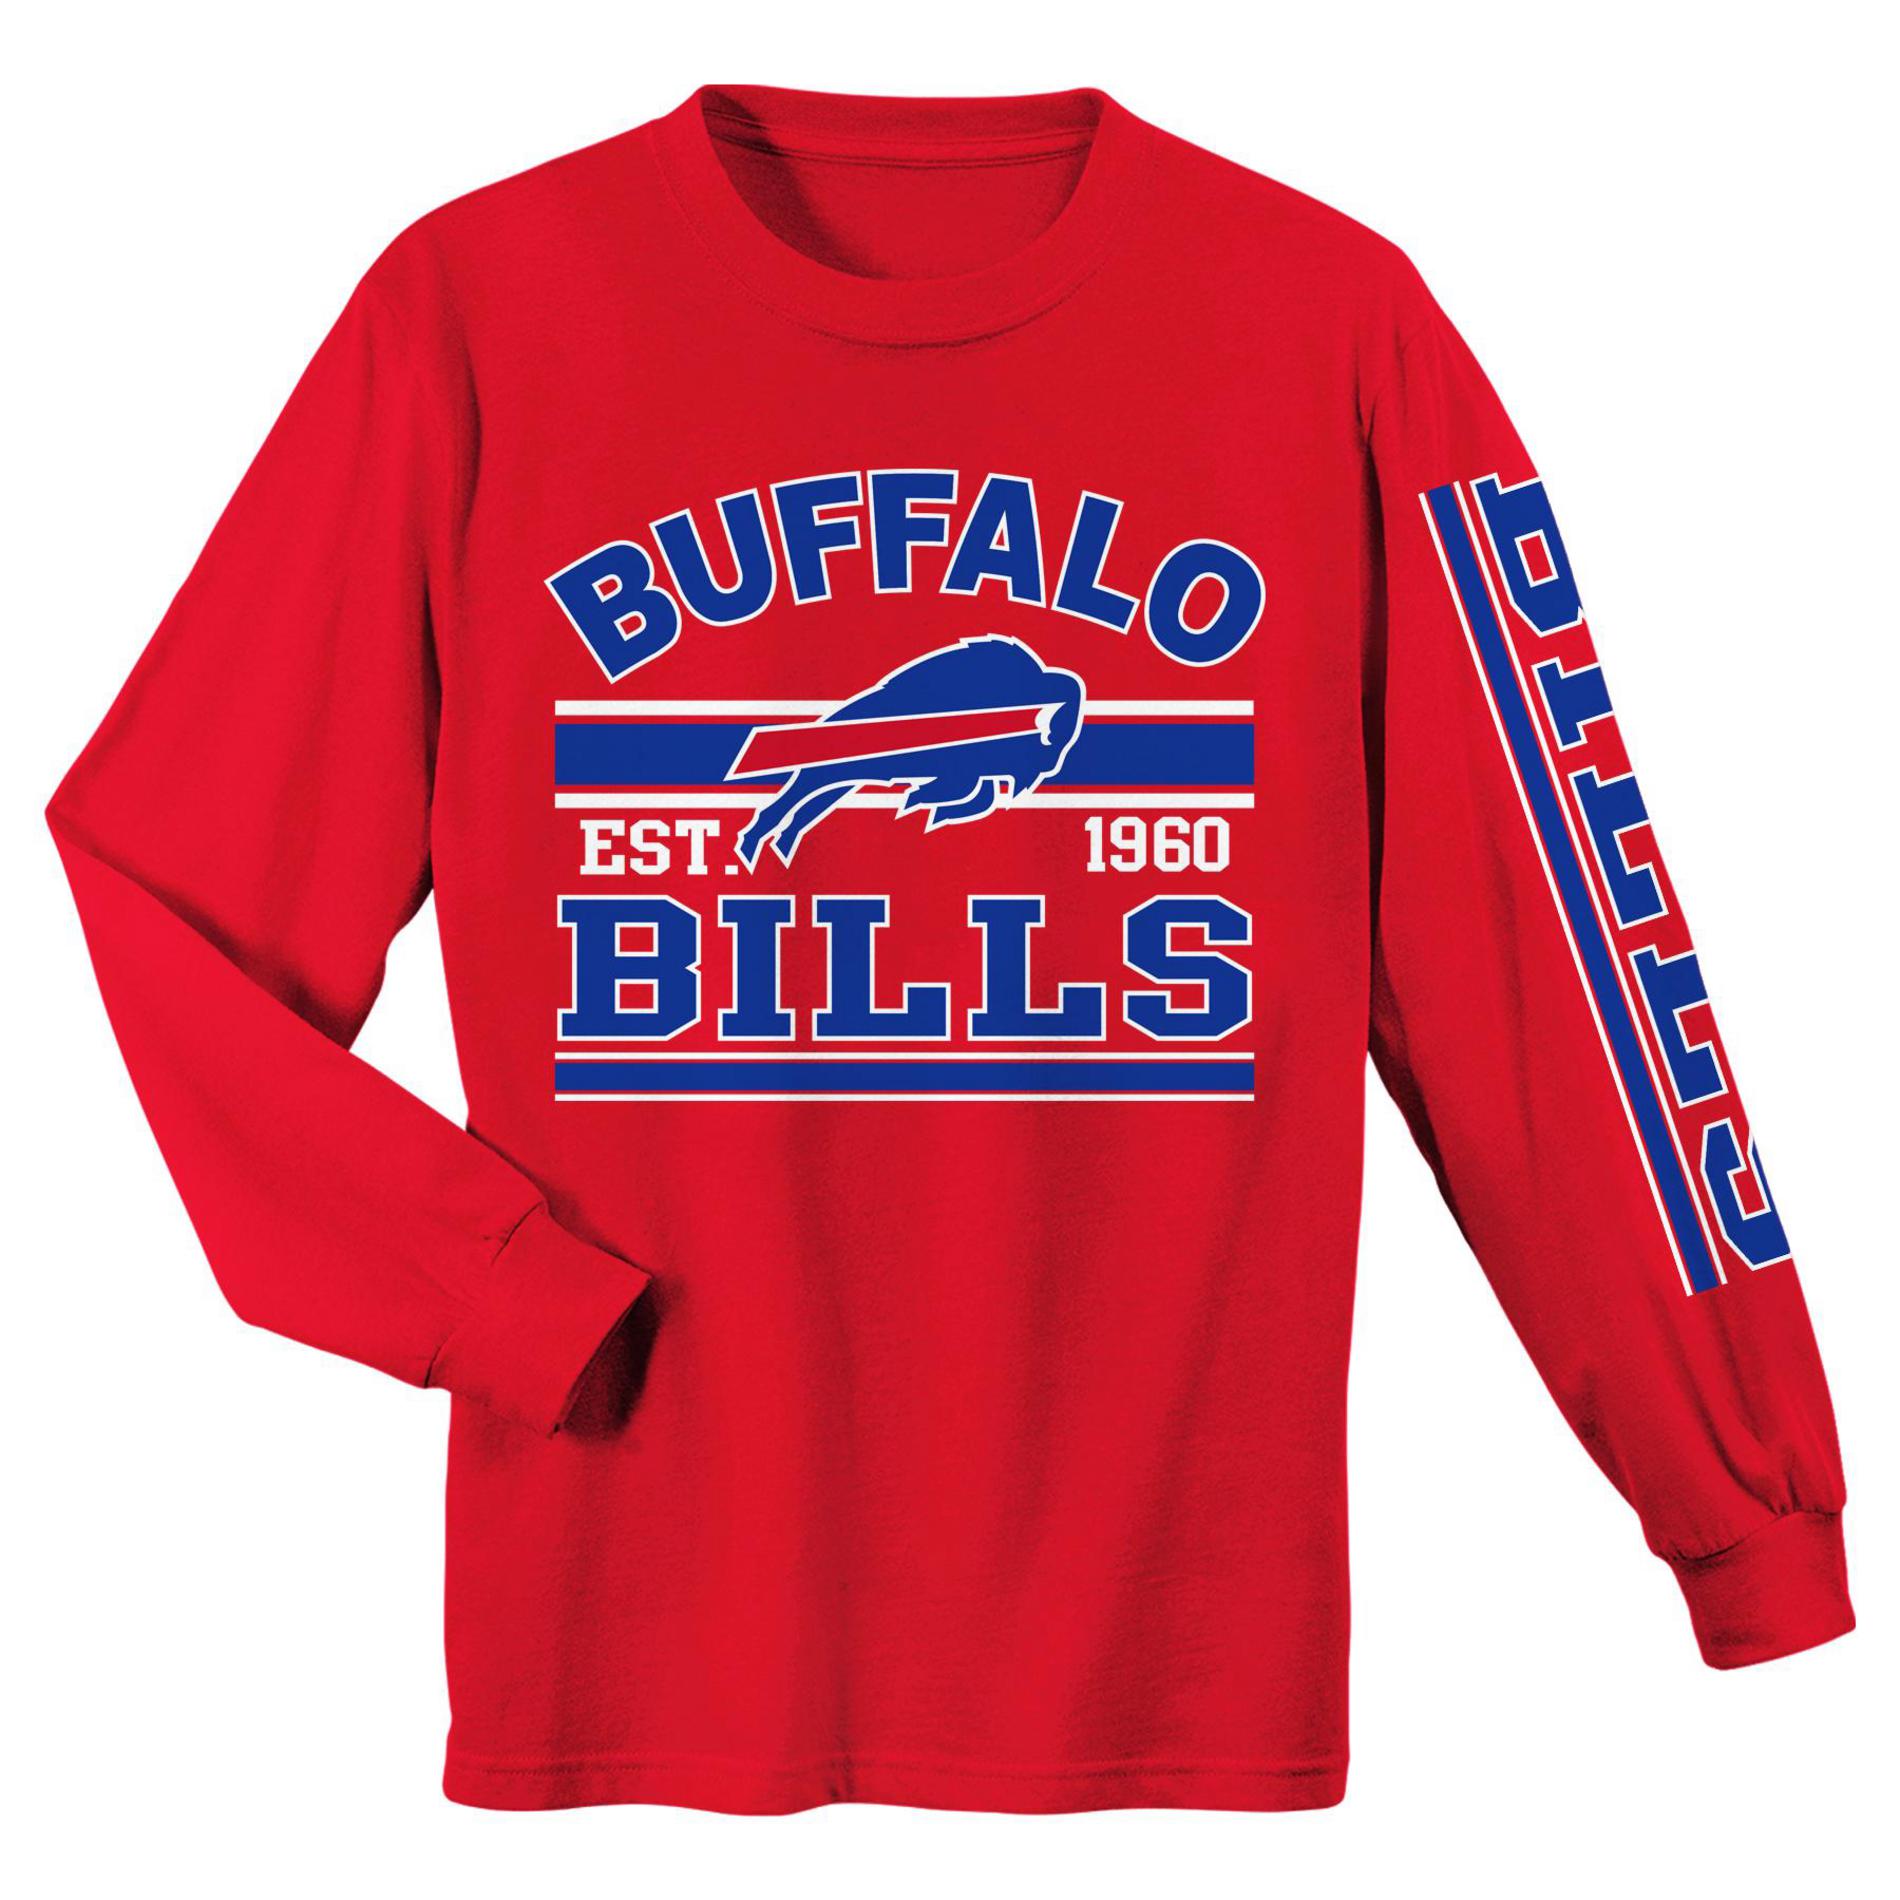 NFL Boys' Long-Sleeve Graphic T-Shirt - Buffalo Bills